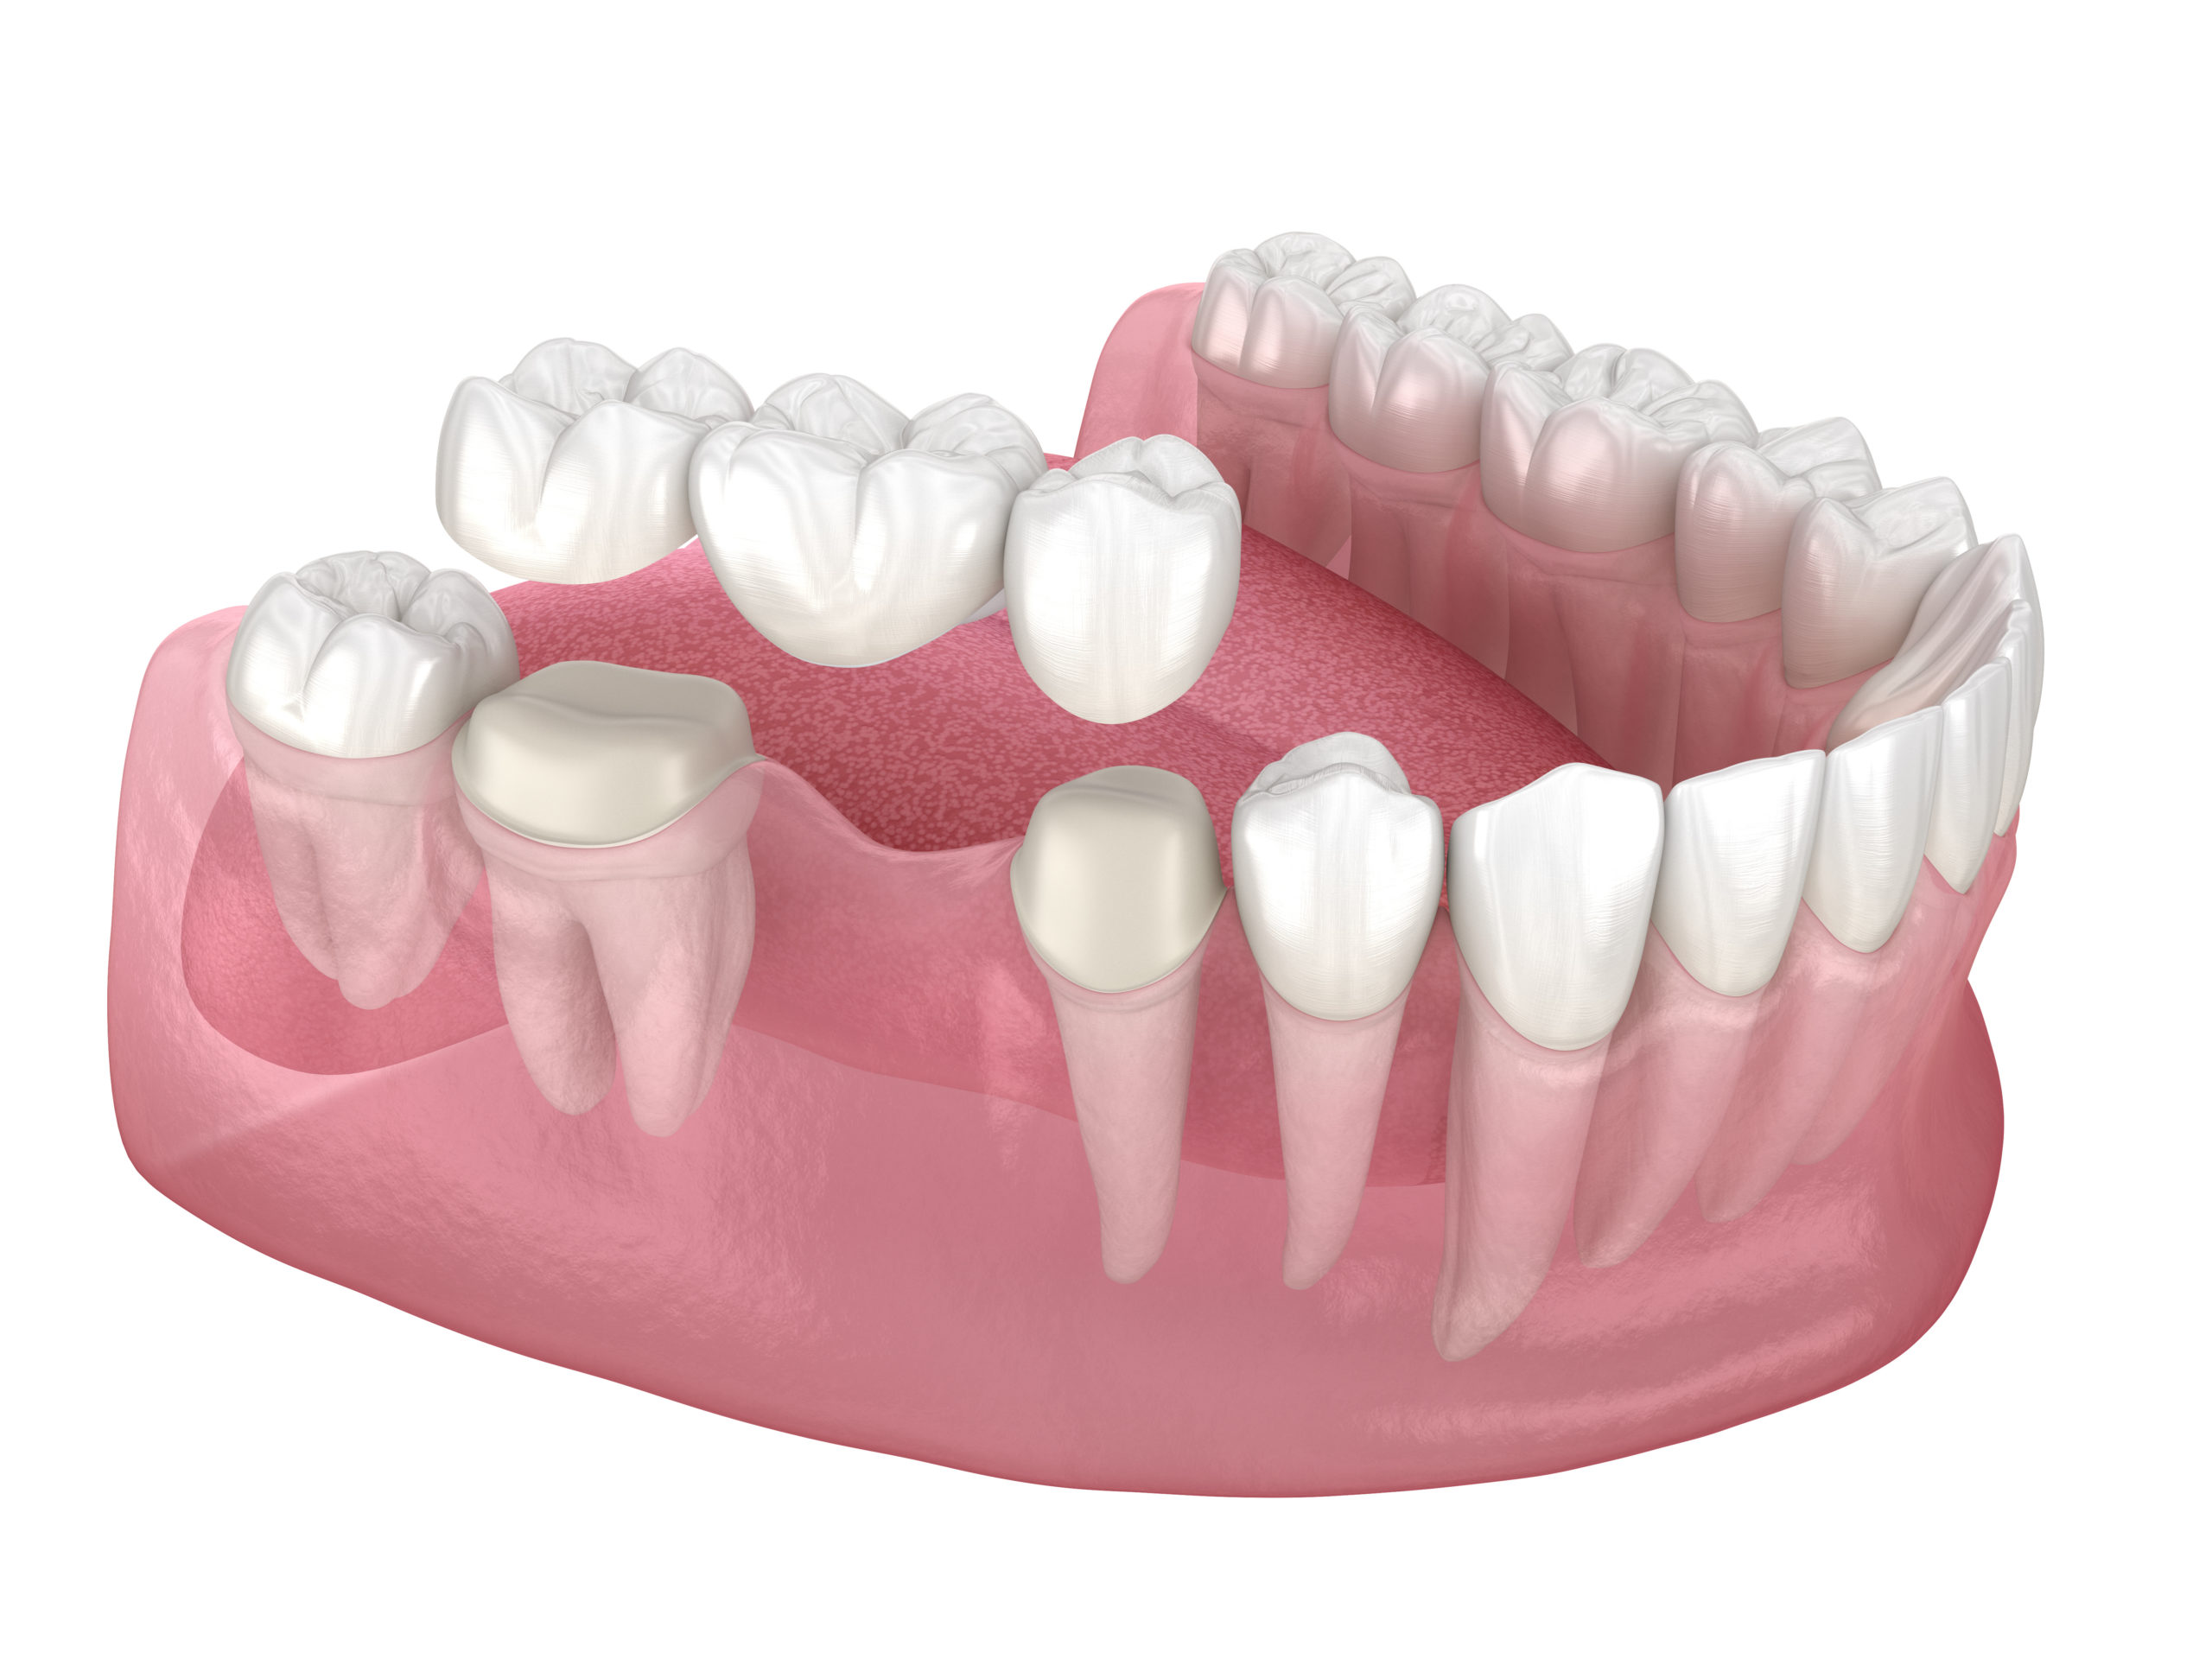 Tooth Implant Vs Bridge: Mom's Dental Care Choices